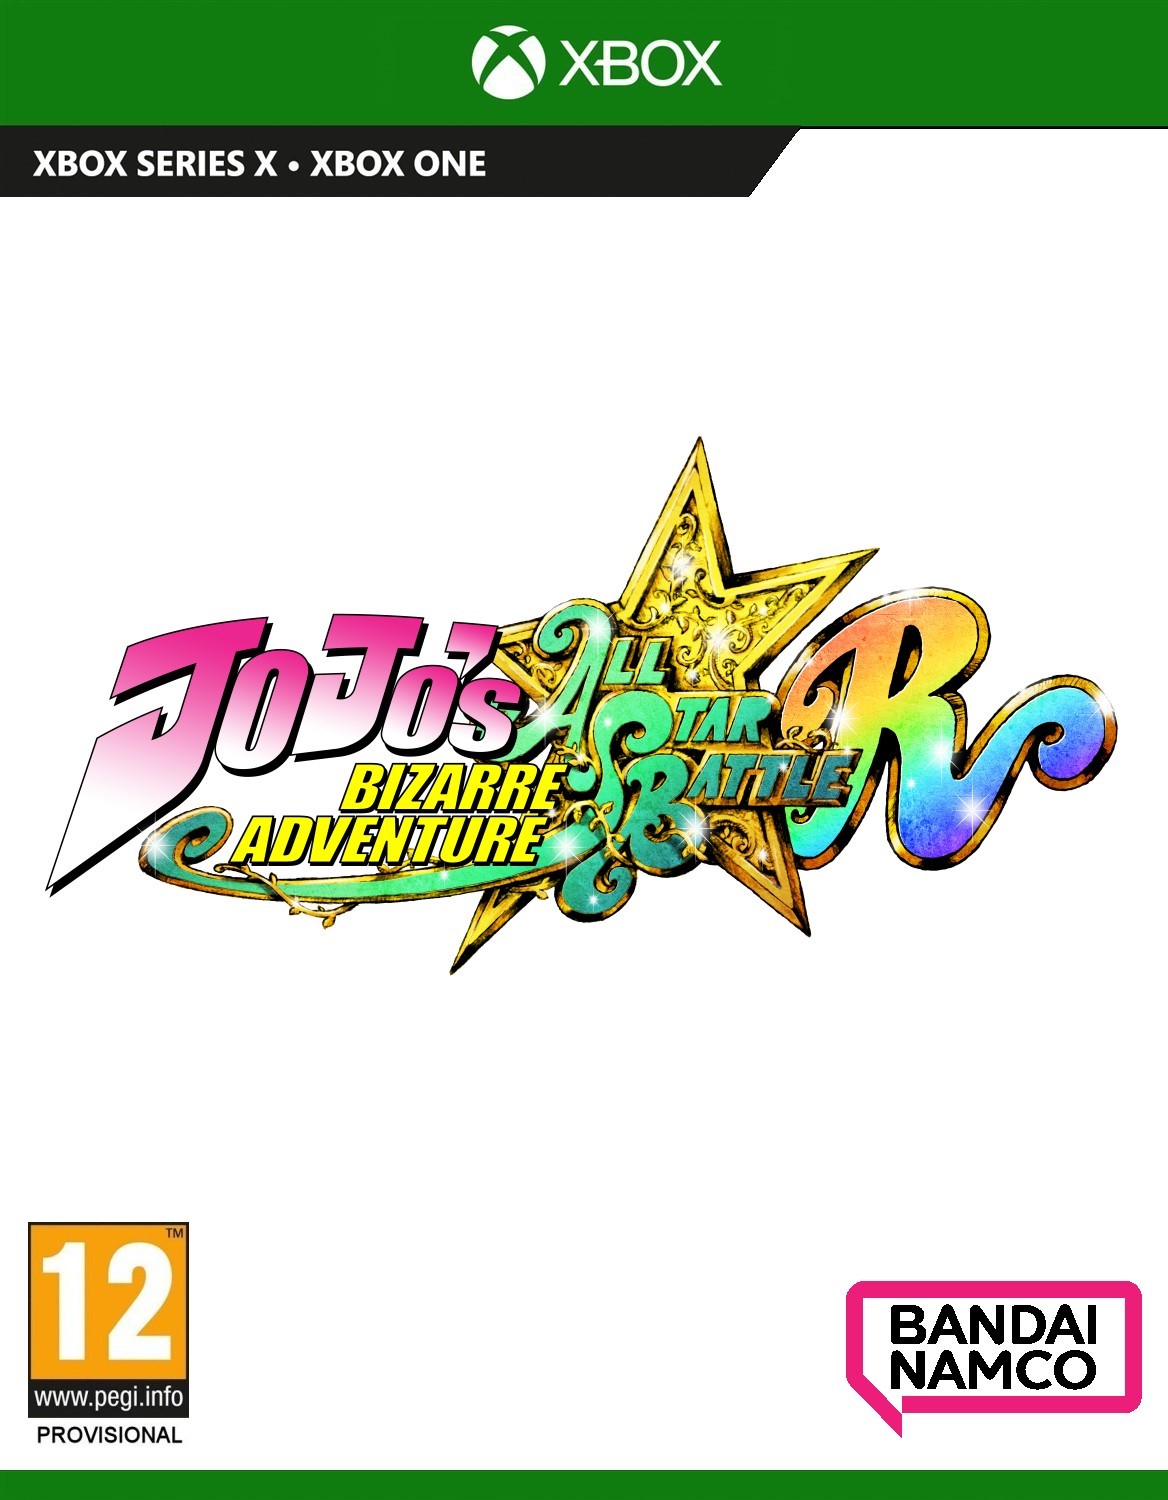 Jojo's Bizarre Adventure: All Star Battle R, XBOX